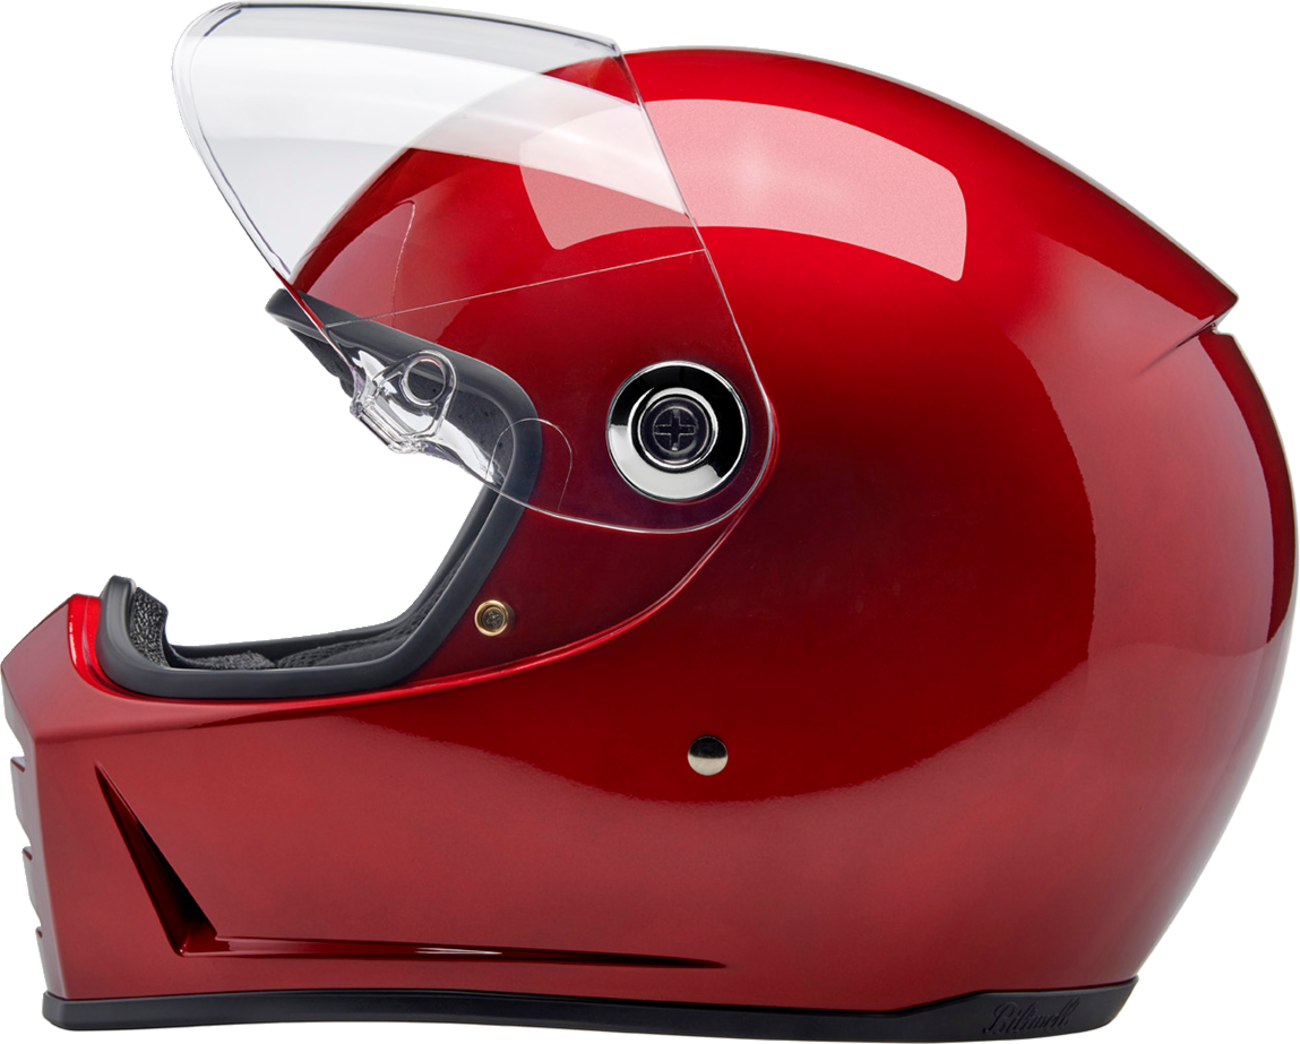 BILTWELL Lane Splitter Helmet - Metallic Cherry Red - Large 1004-351-504